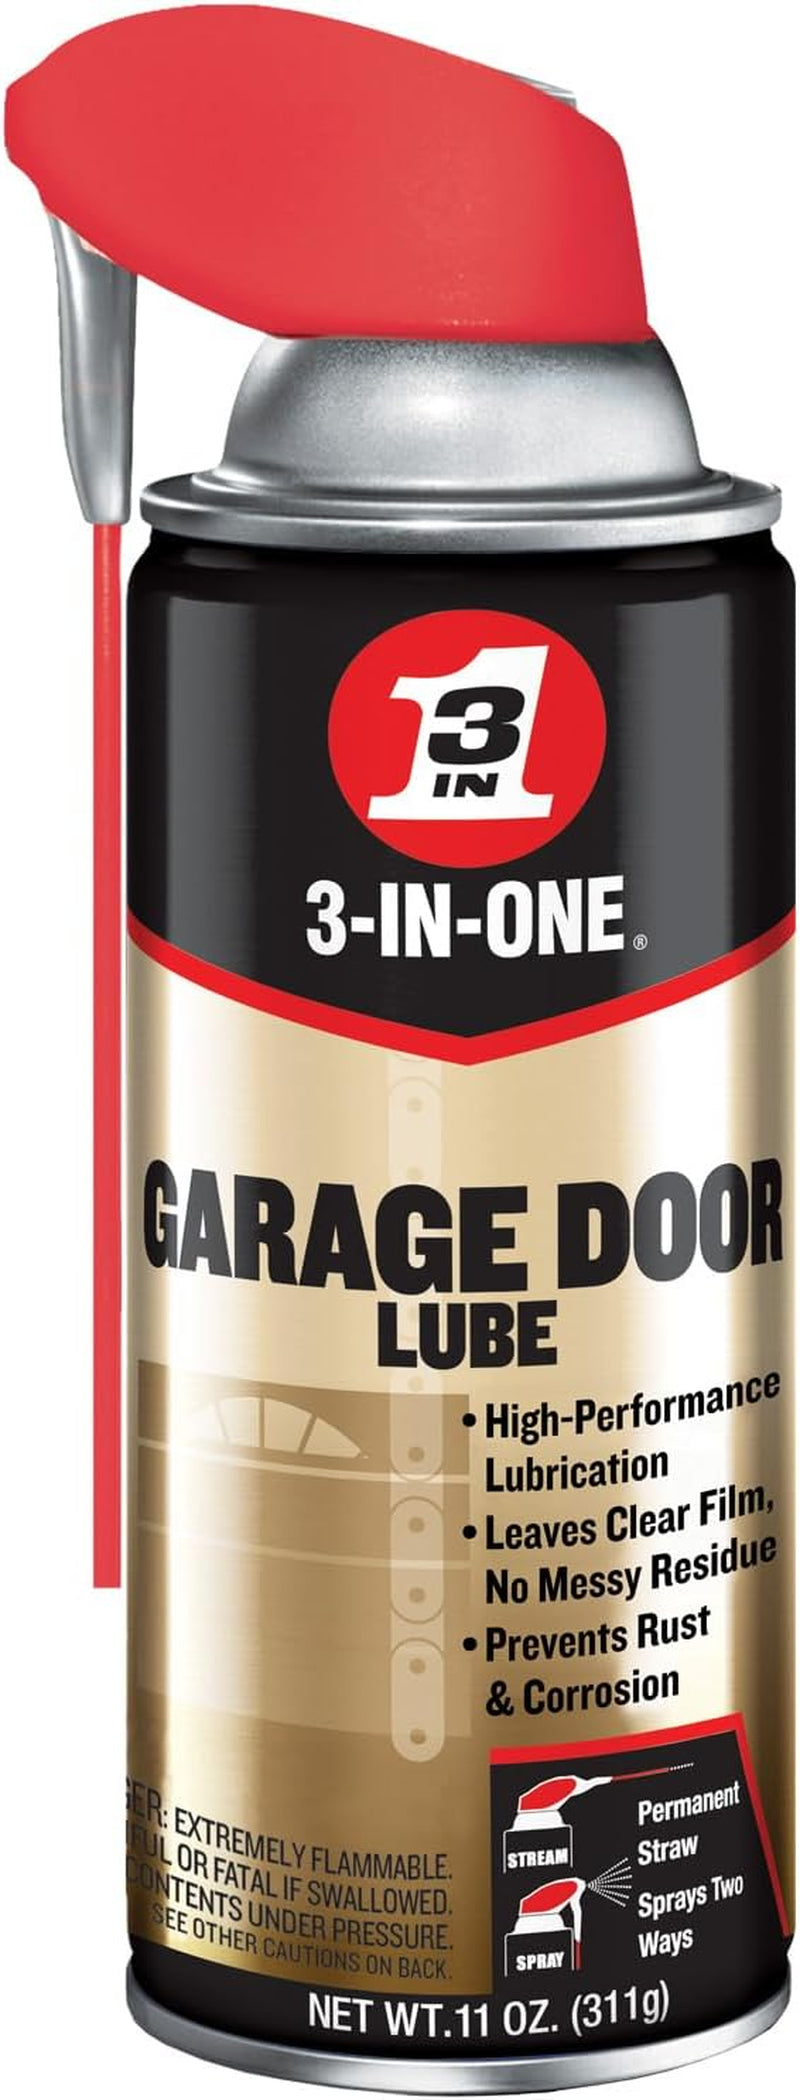 Garage Door Lubricant with SMART STRAW SPRAYS 2 WAYS, 11 OZ